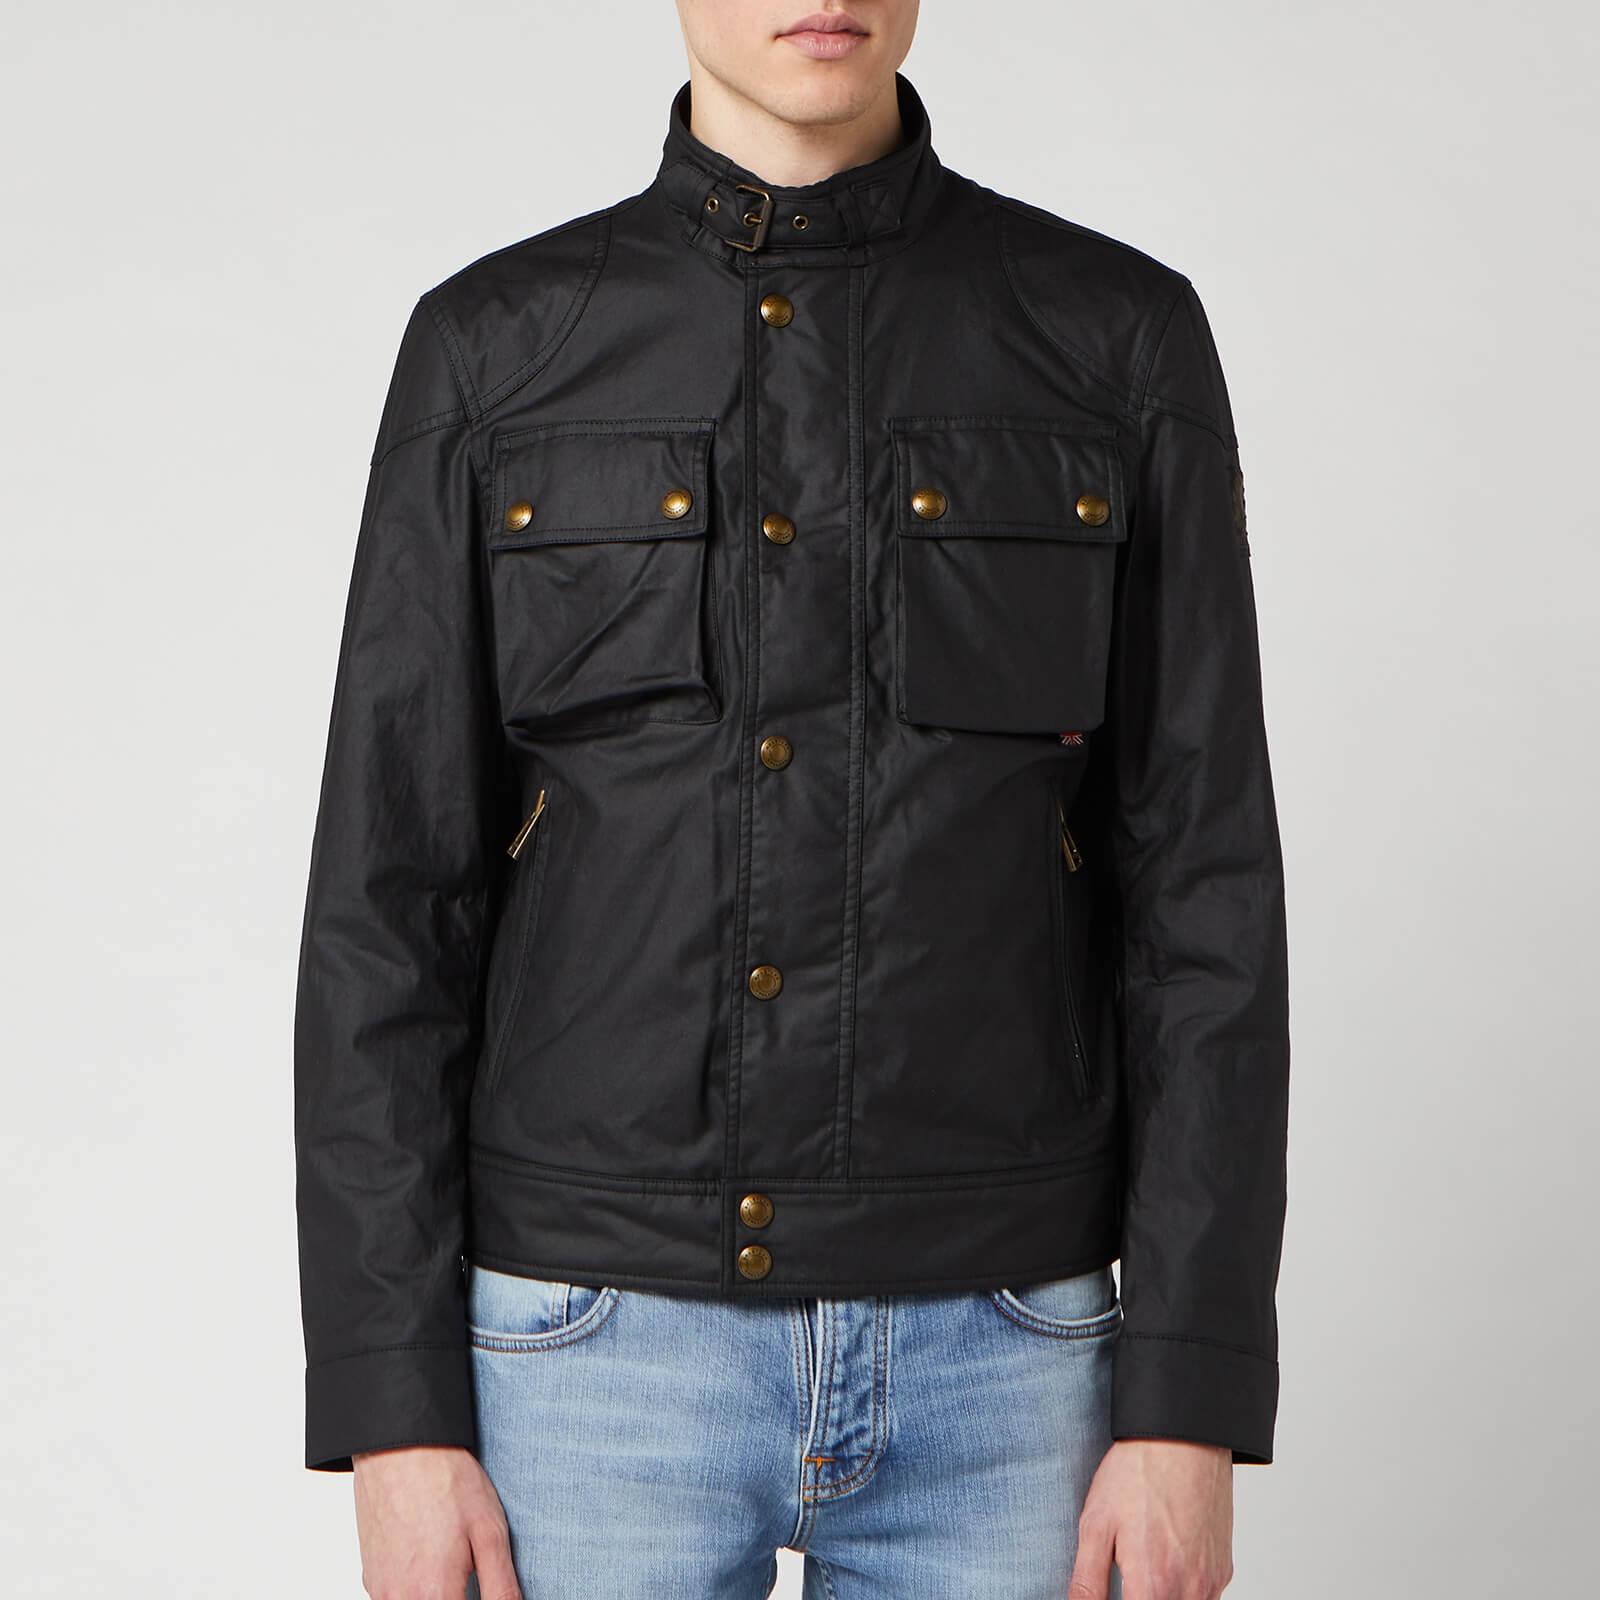 Belstaff Cotton Racemaster Jacket in Black for Men - Lyst